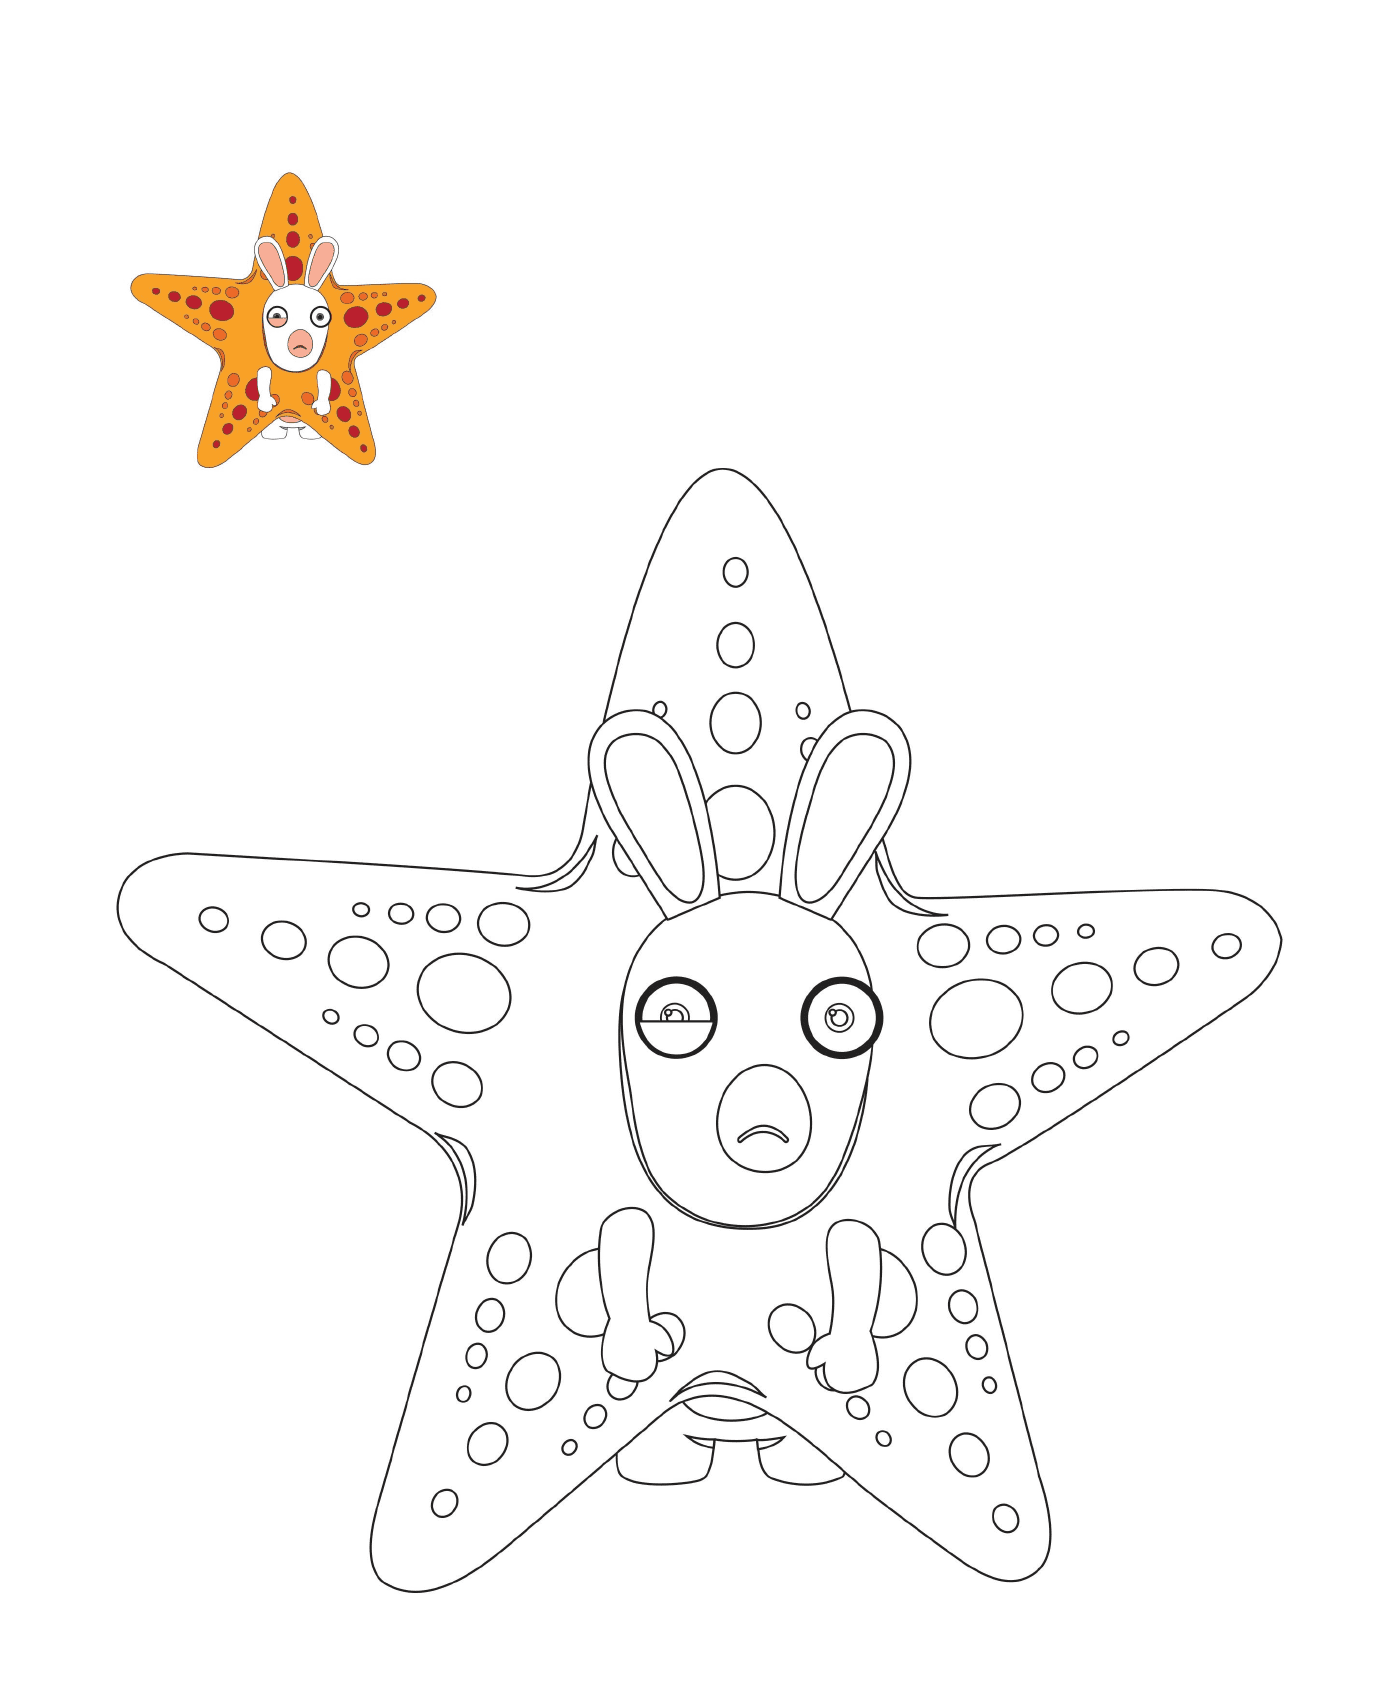  Conejo Cretin estrella de mar 